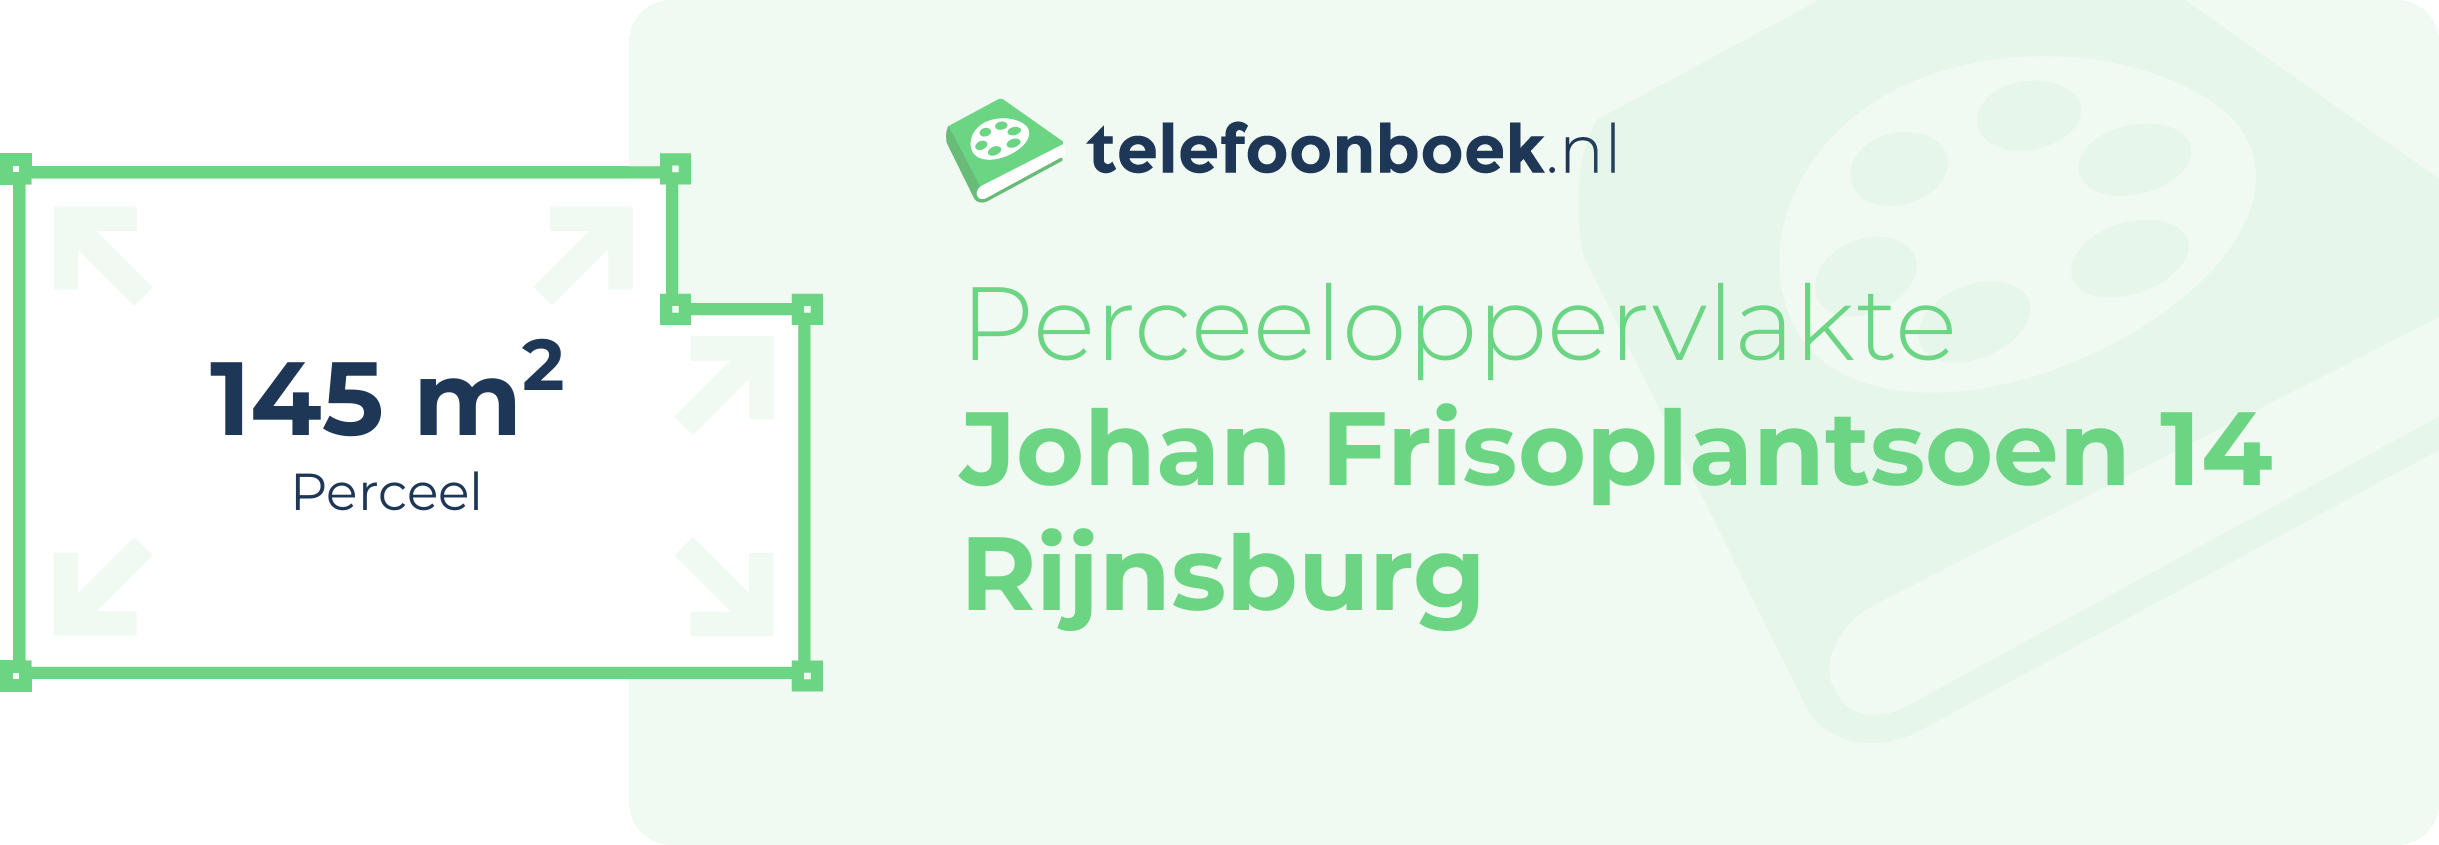 Perceeloppervlakte Johan Frisoplantsoen 14 Rijnsburg